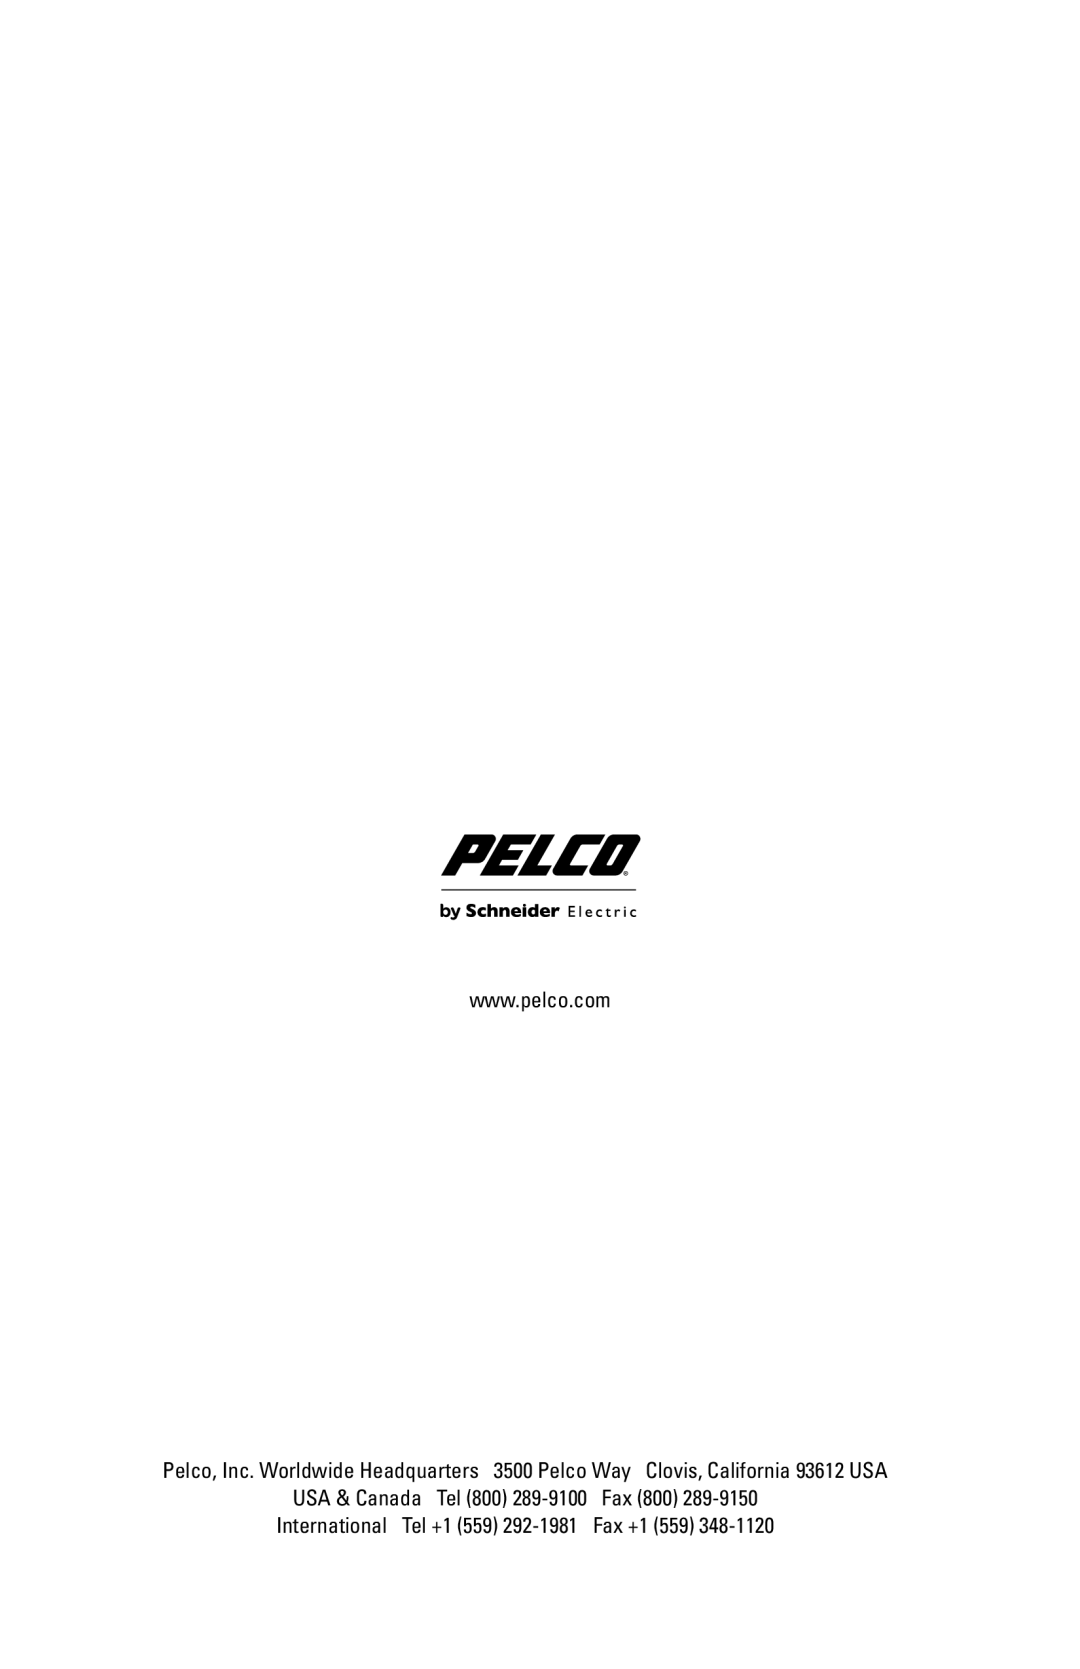 Pelco IV IP manual USA & Canada Tel 800 289-9100Fax, International Tel +1 559 292-1981Fax +1 